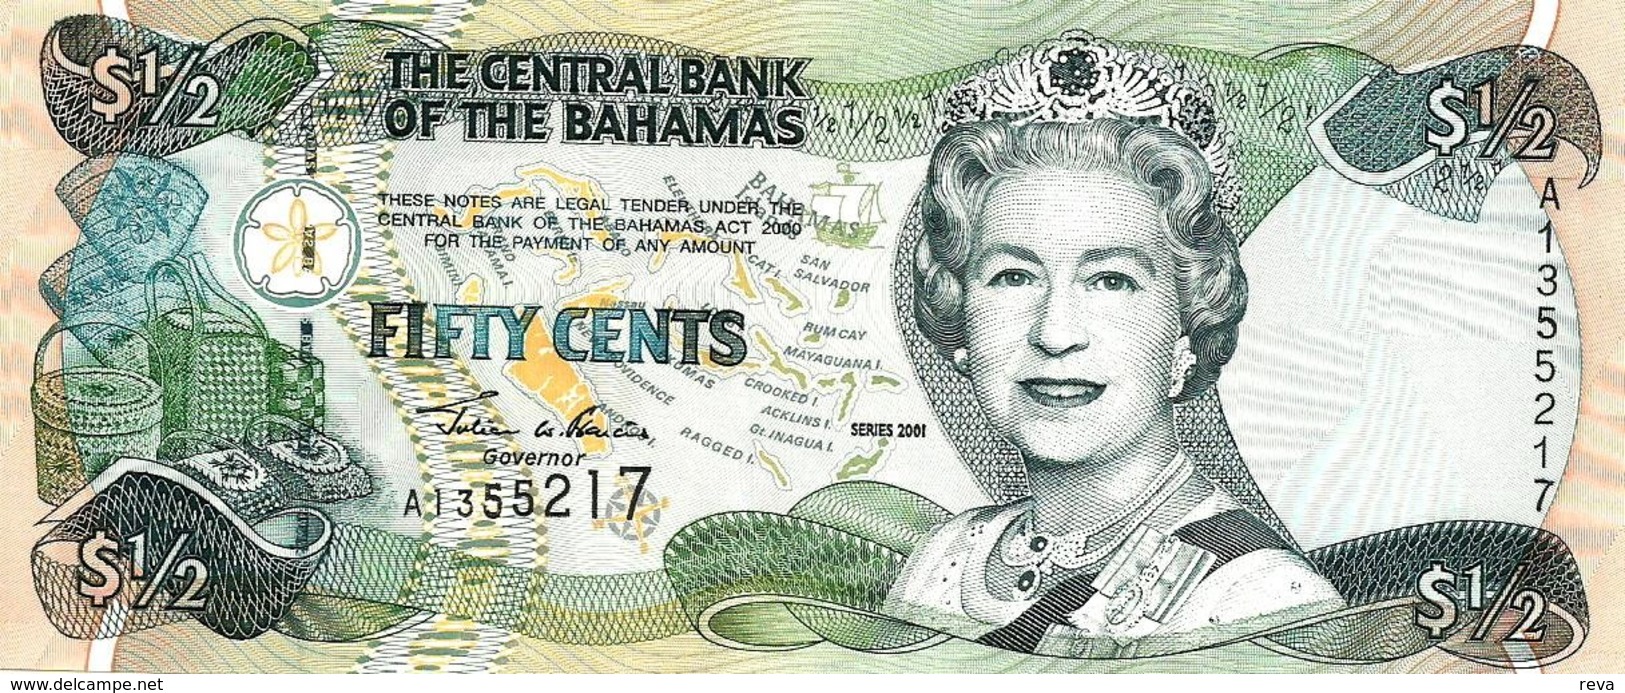 BAHAMAS $1/2 GREEN WOMAN QEII FRONT WOMAN FRUITS BACK DATED 2001 UNC P.68 READ DESCRIPTION !! - Bahamas